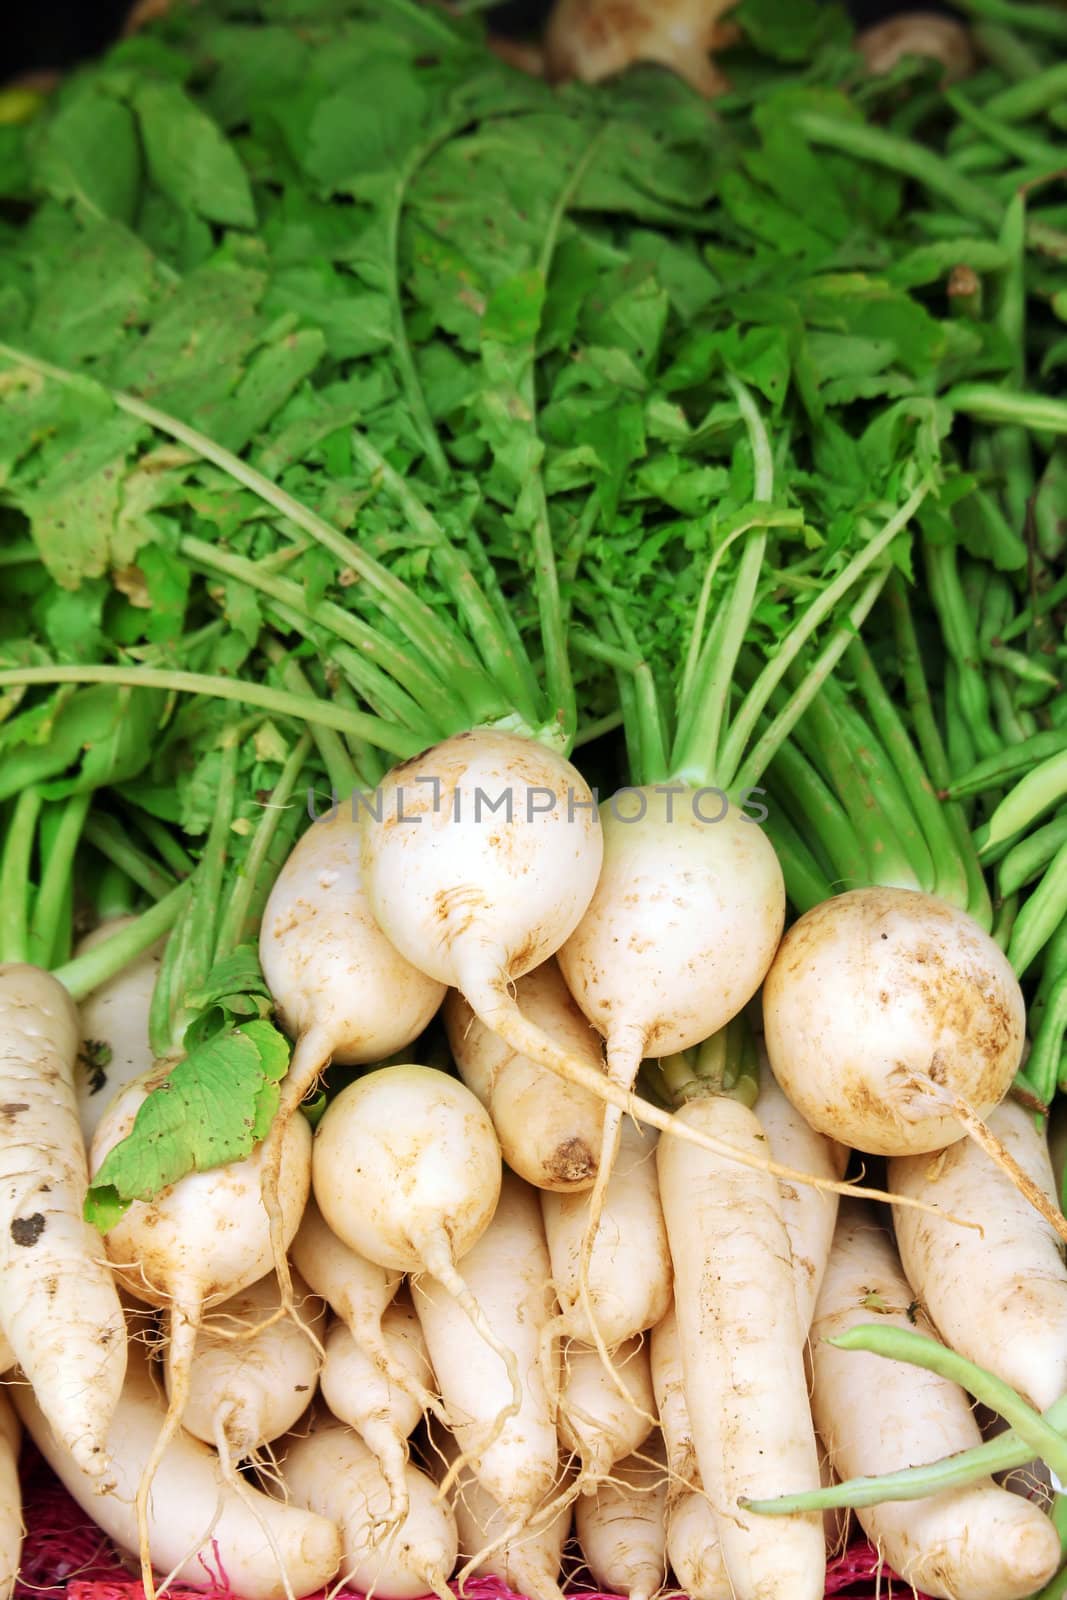 Ripe white radish root in the market